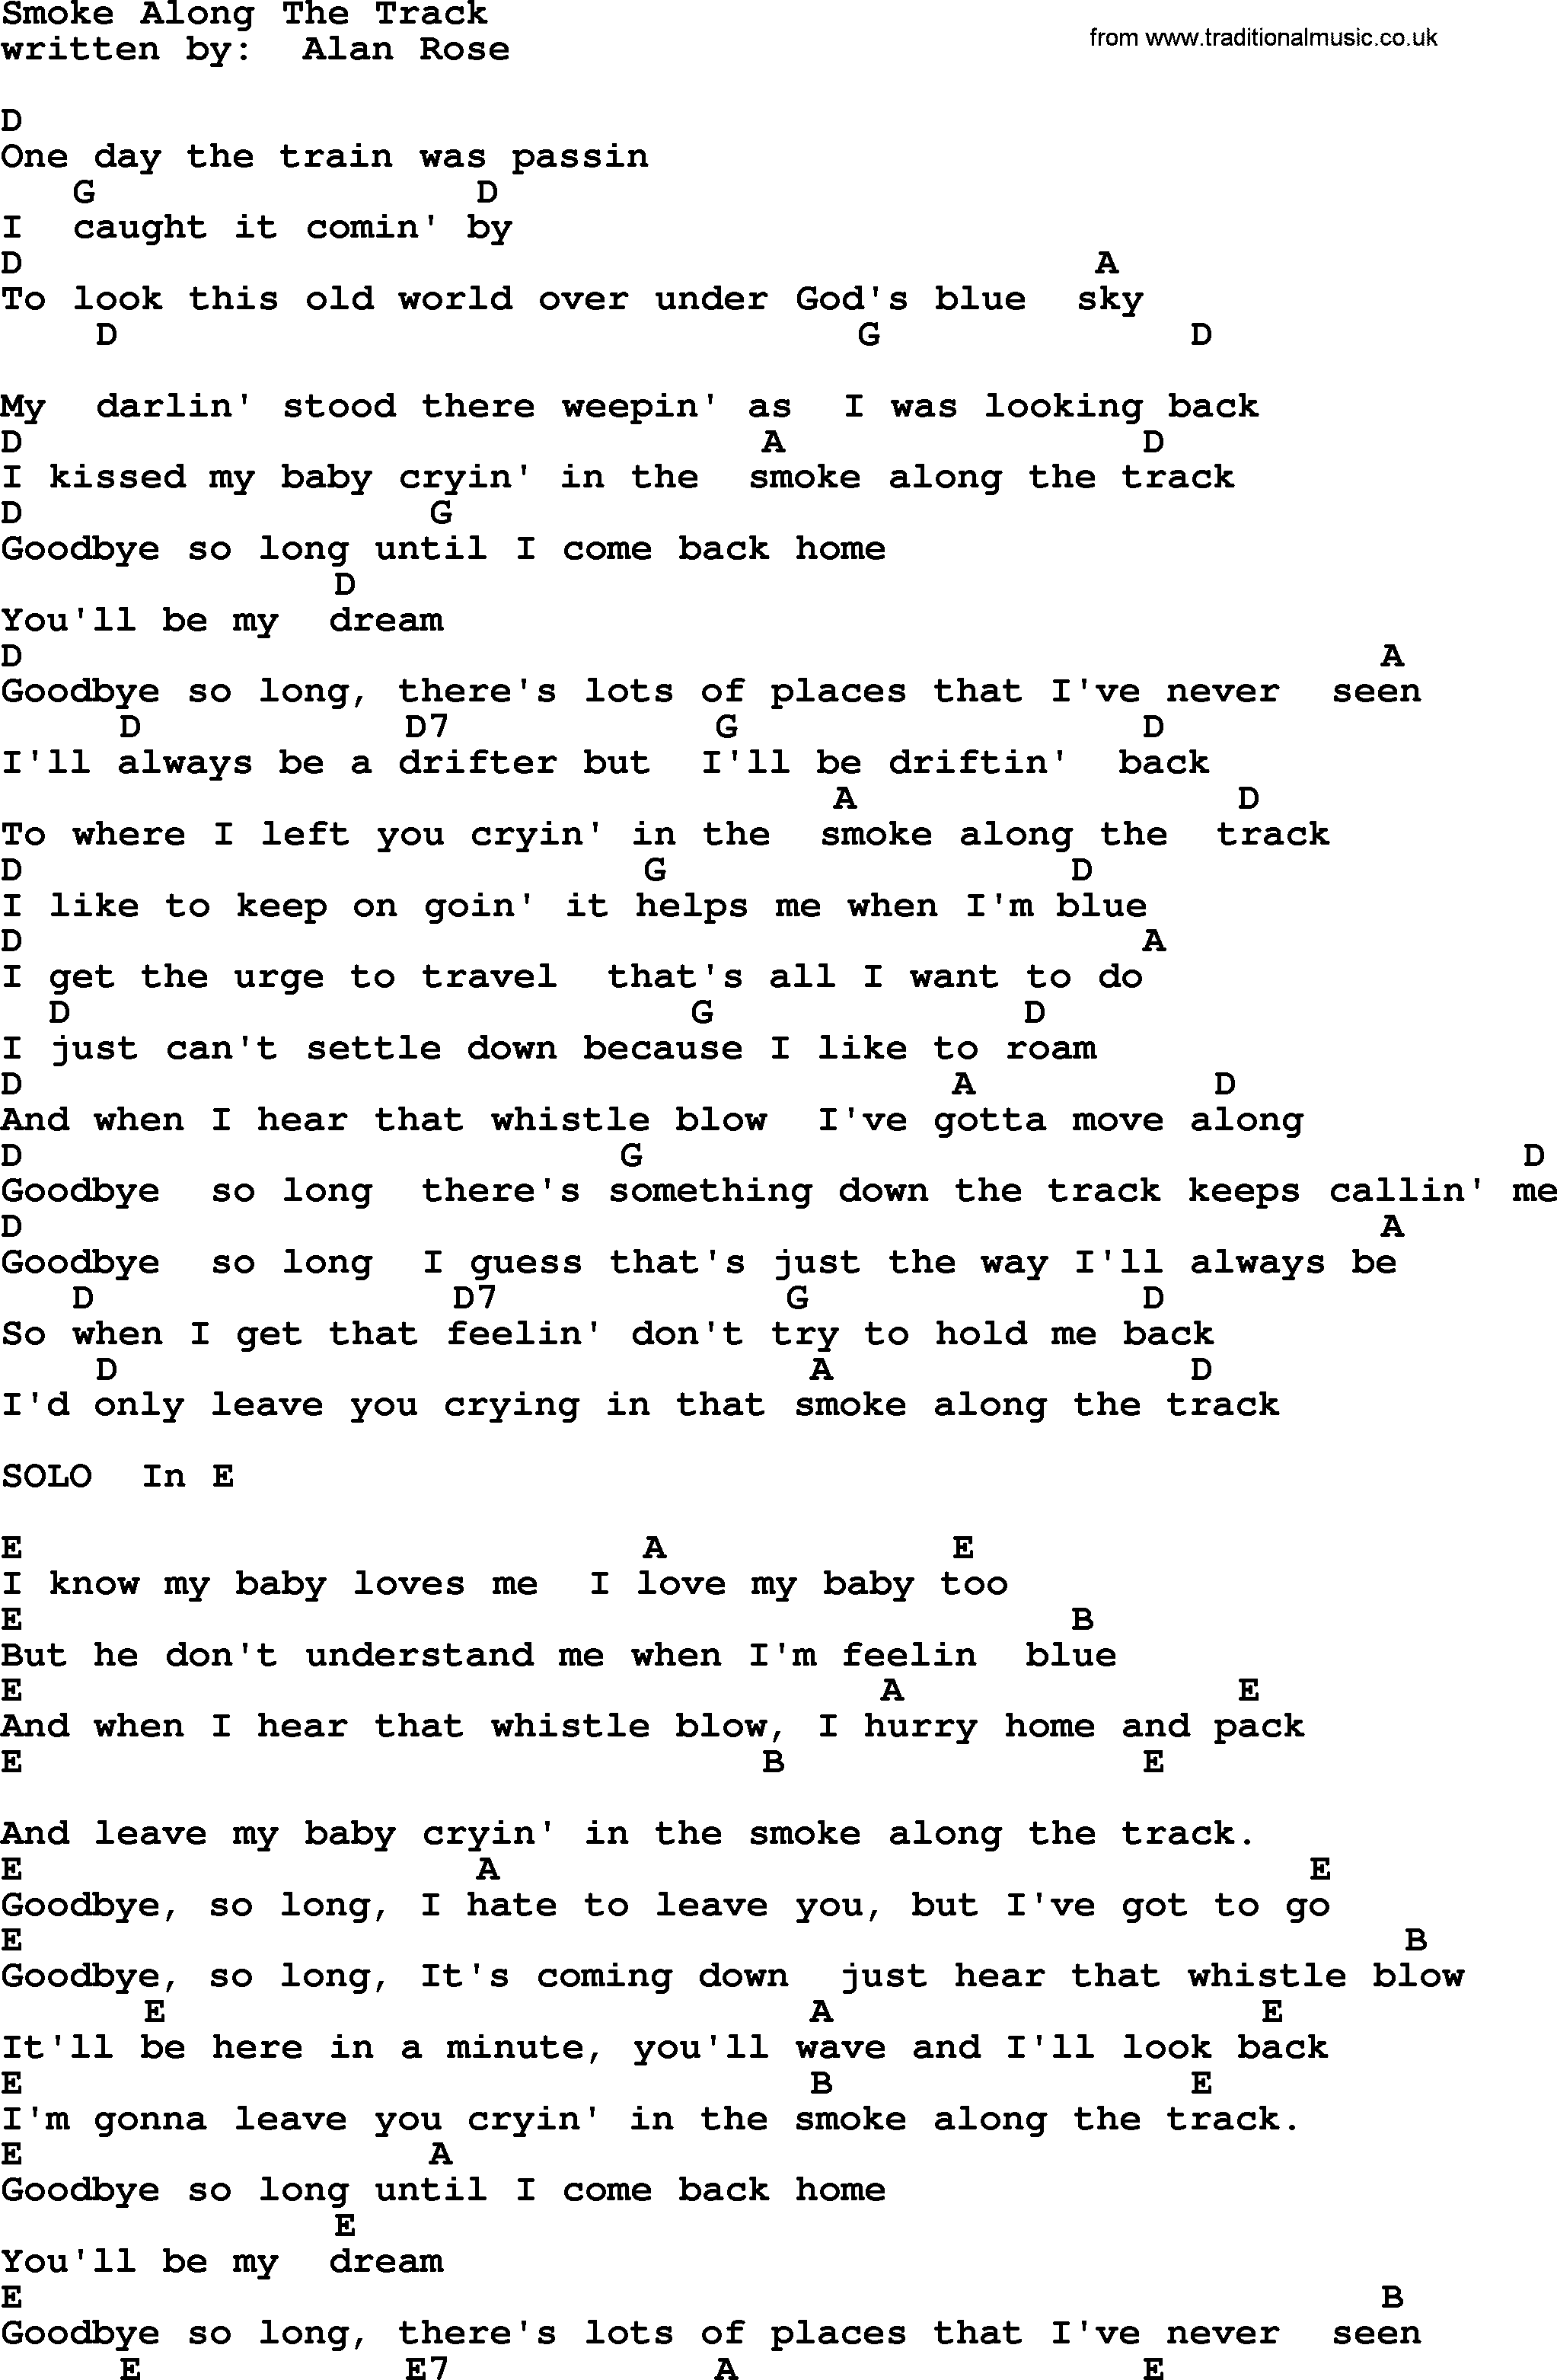 Emmylou Harris song: Smoke Along The Track lyrics and chords